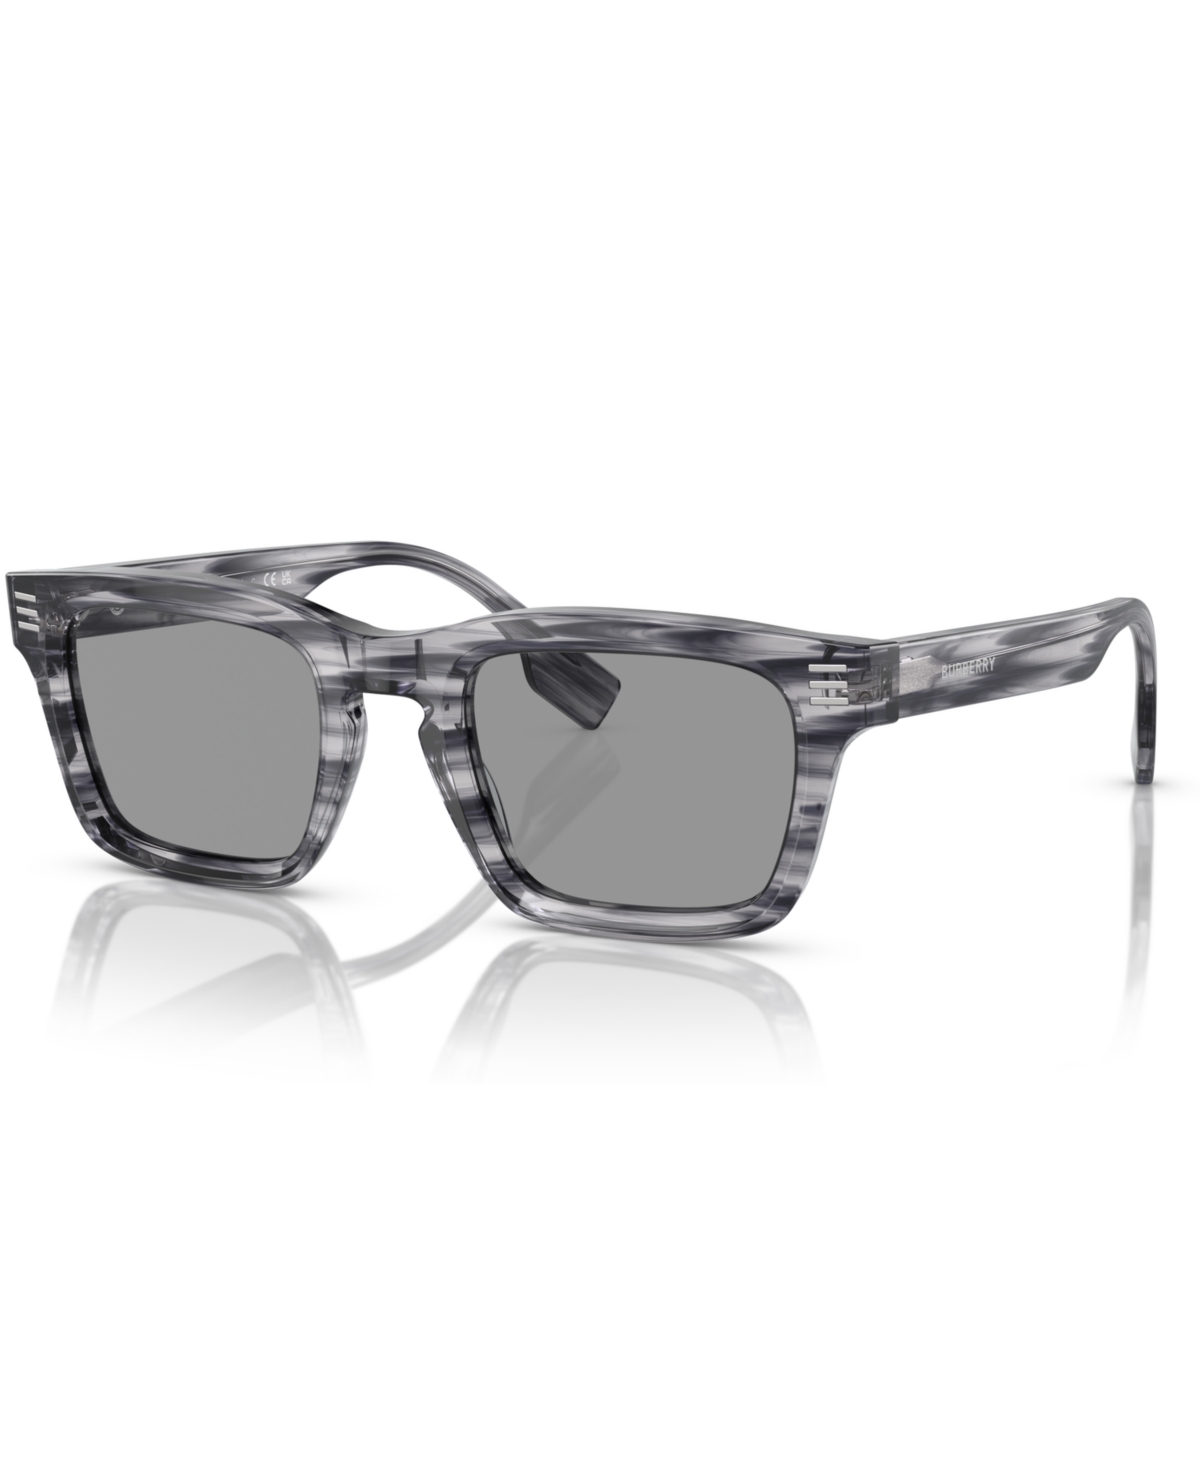 Men's Sunglasses BE4403 - Gray